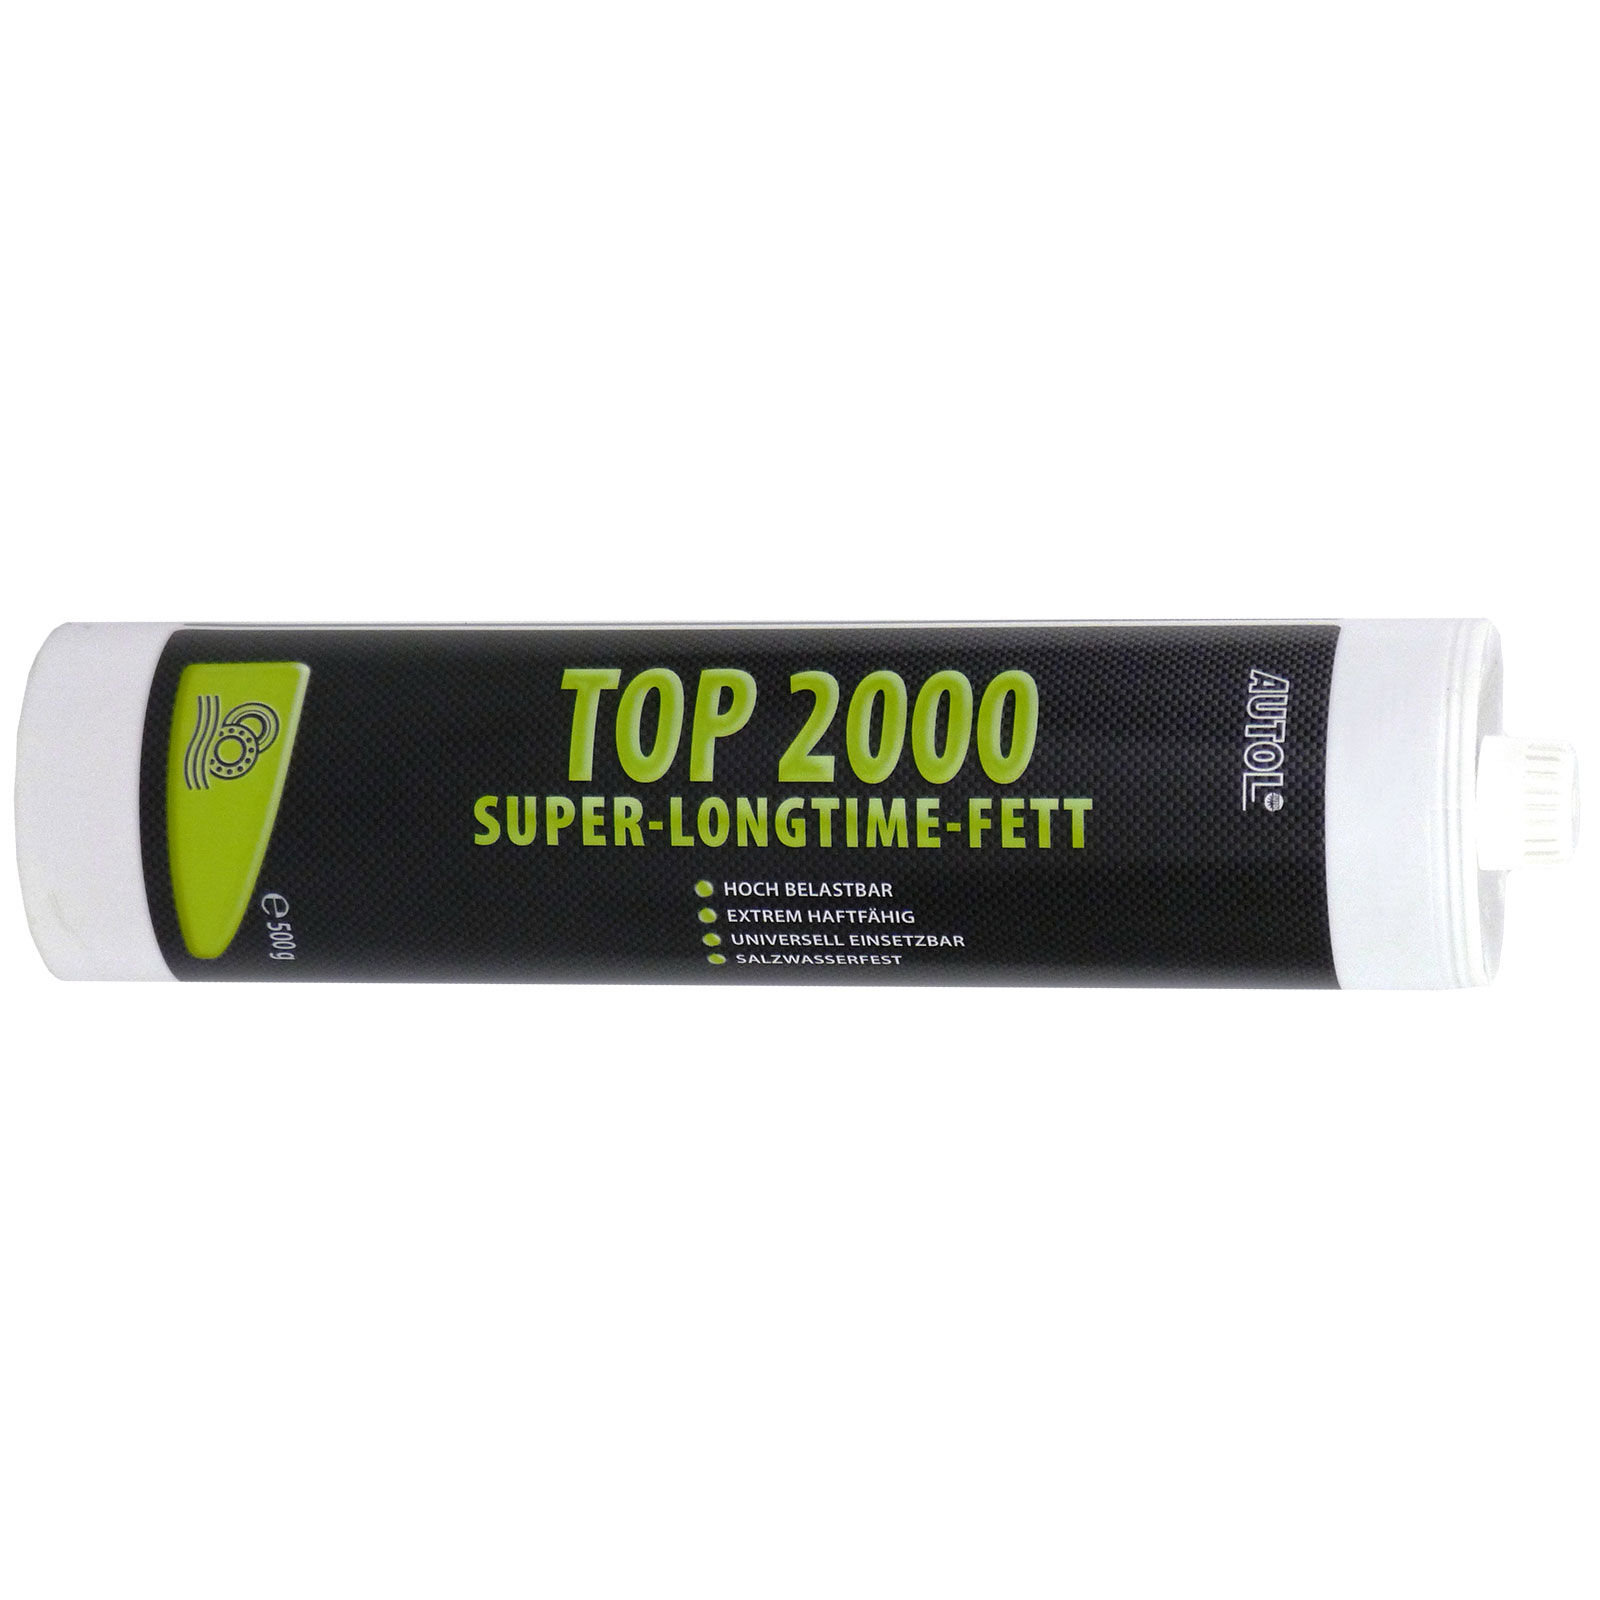 Spezialfett AUTOL TOP 2000 Super-Longtime-Fett - 500 g-Schraubkartusche ✔️  für 7,50 € ✔️ Quebag Agrar Shop